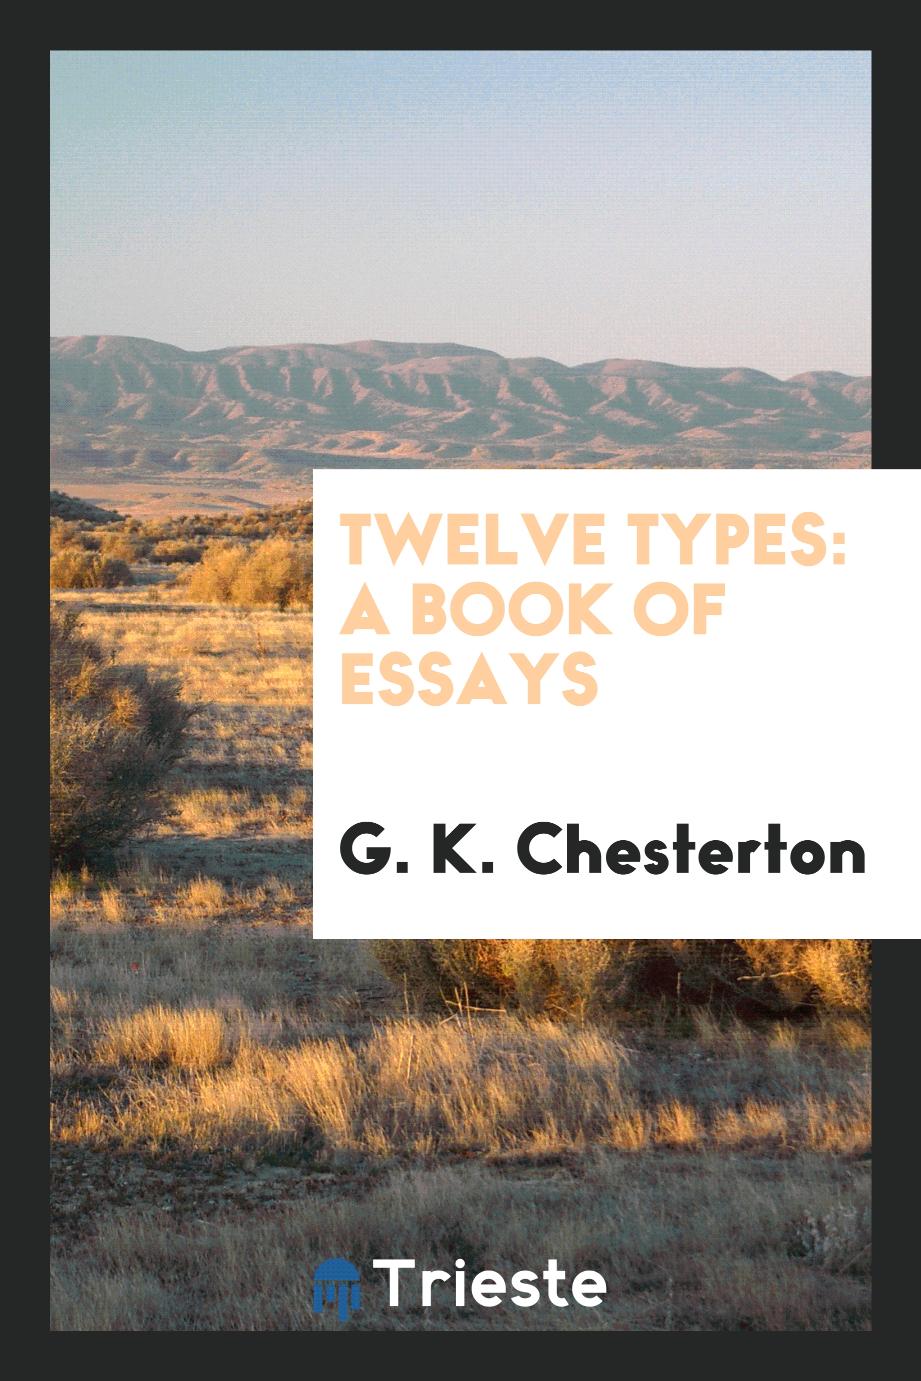 Twelve types: a book of essays